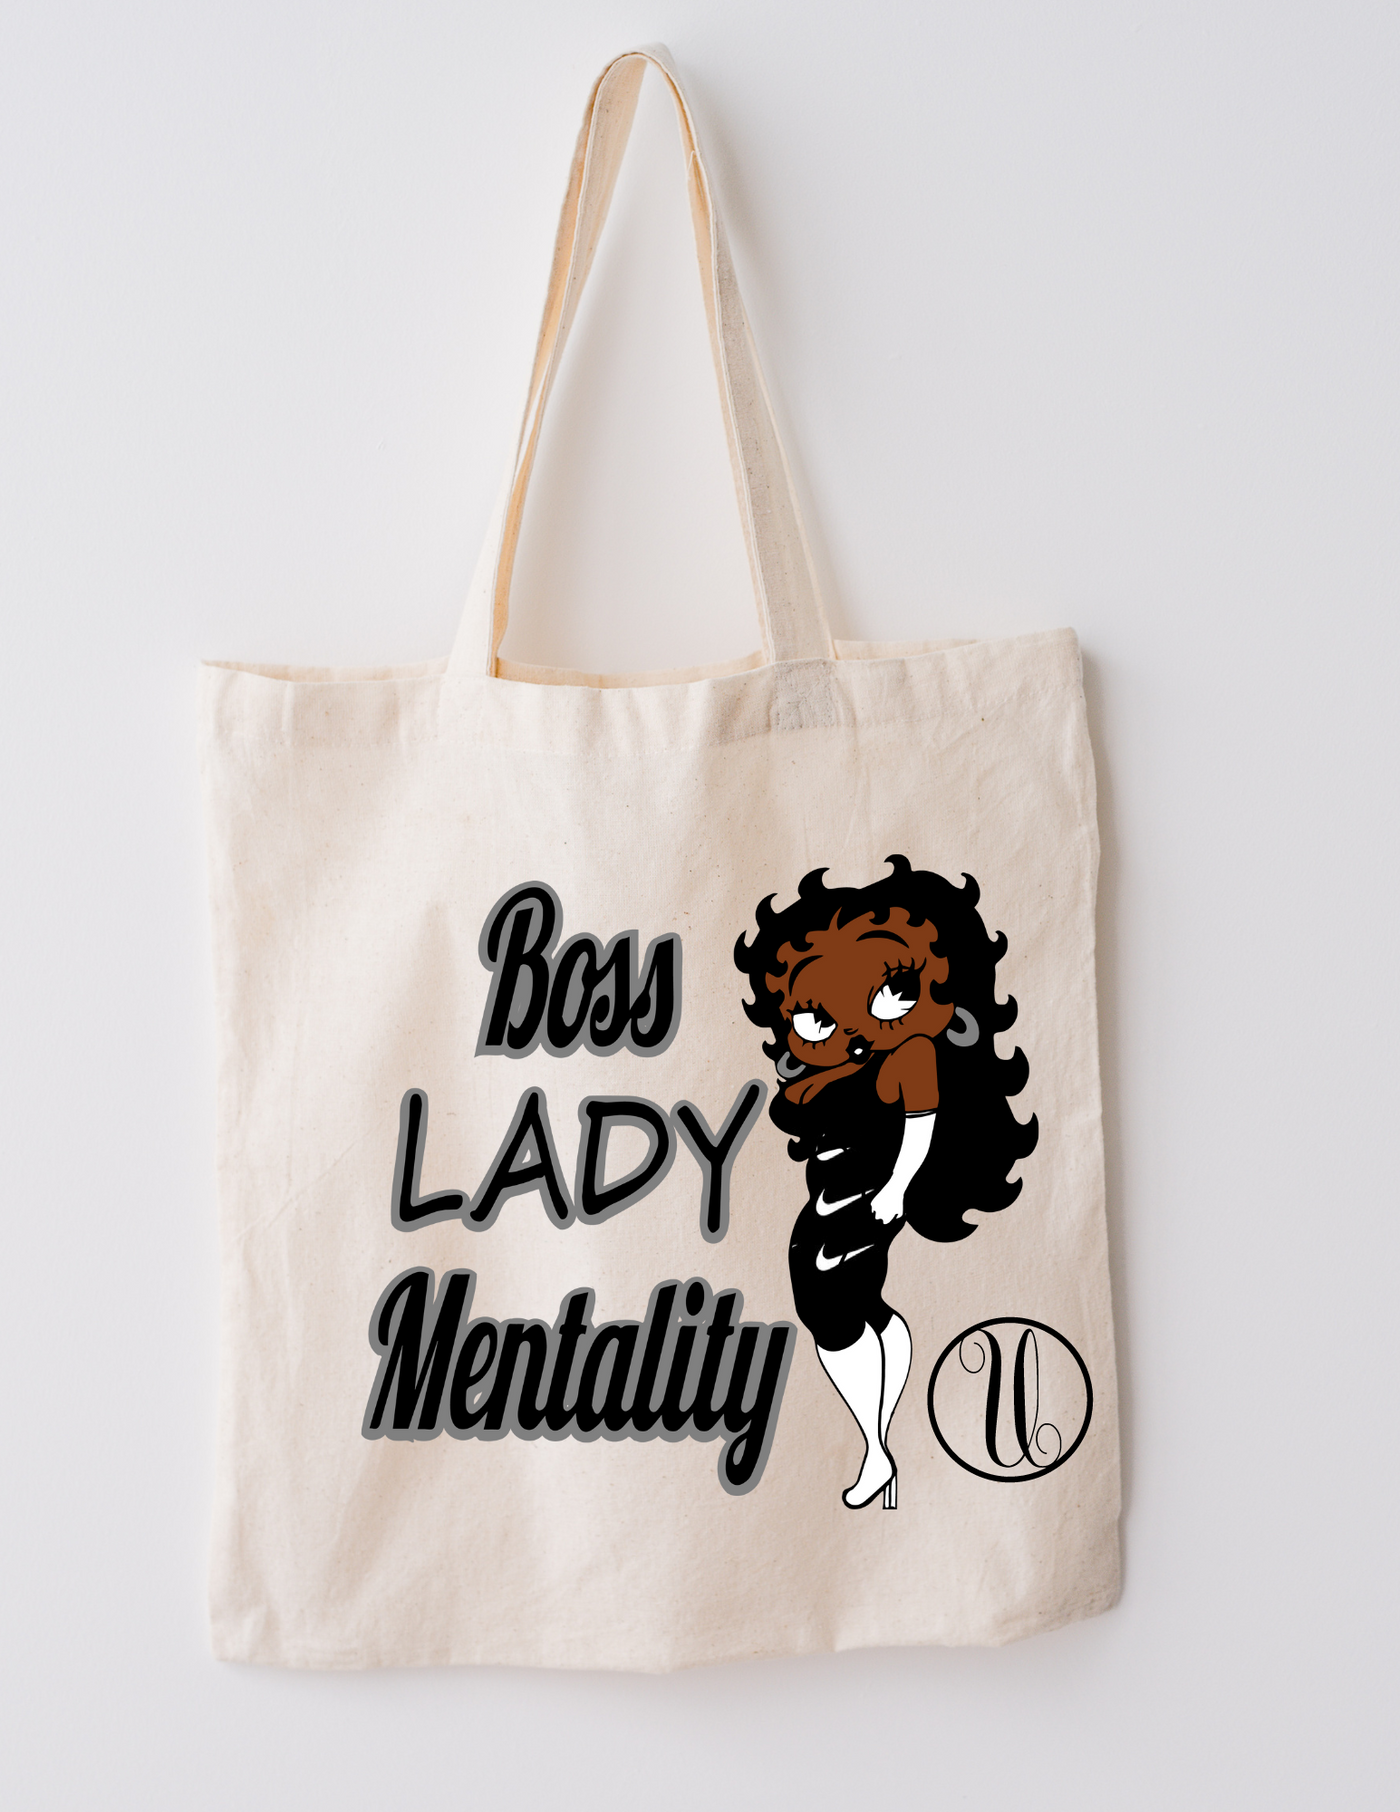 Betty Boop - Boss Lady Mentality